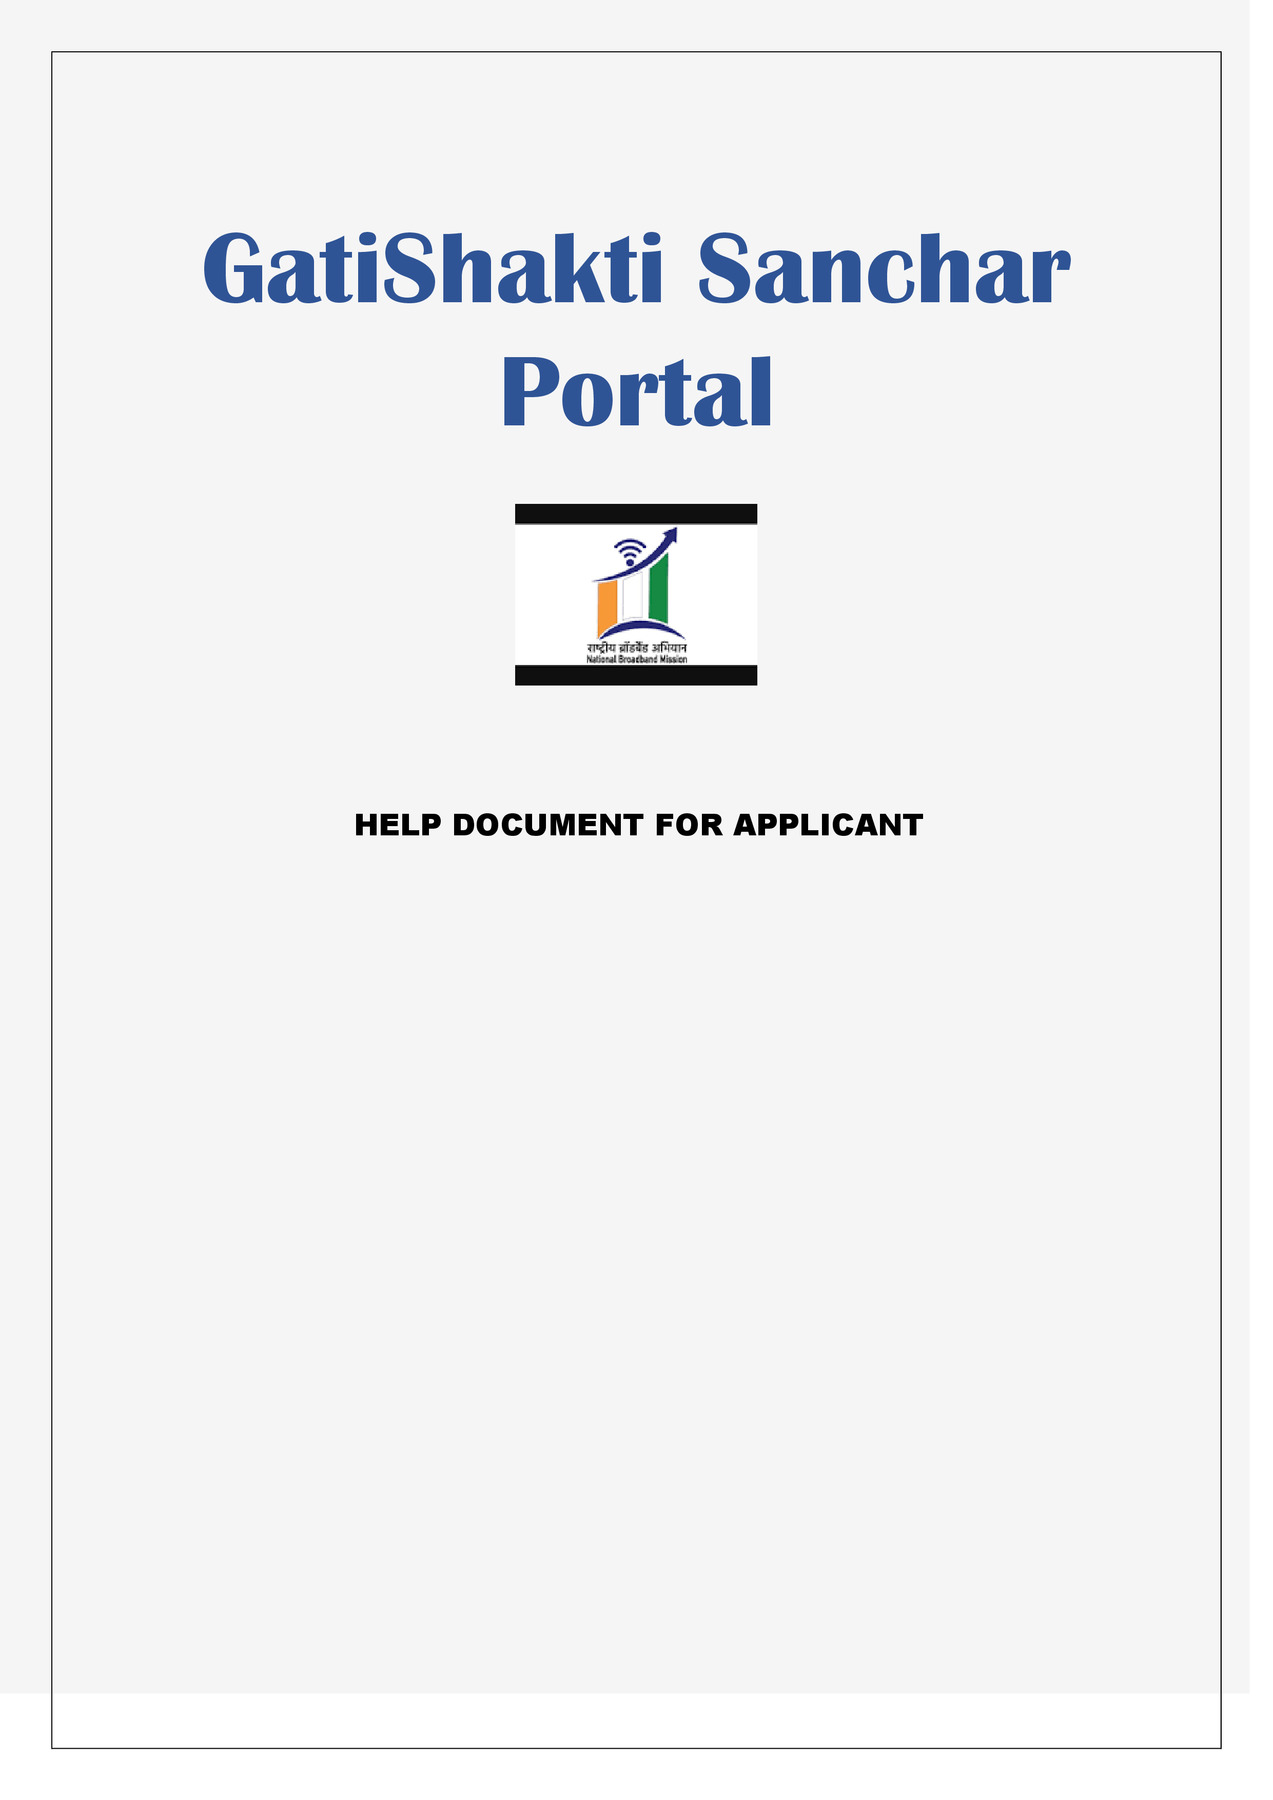 GatiShakti Sanchar Portal User Manual PDF